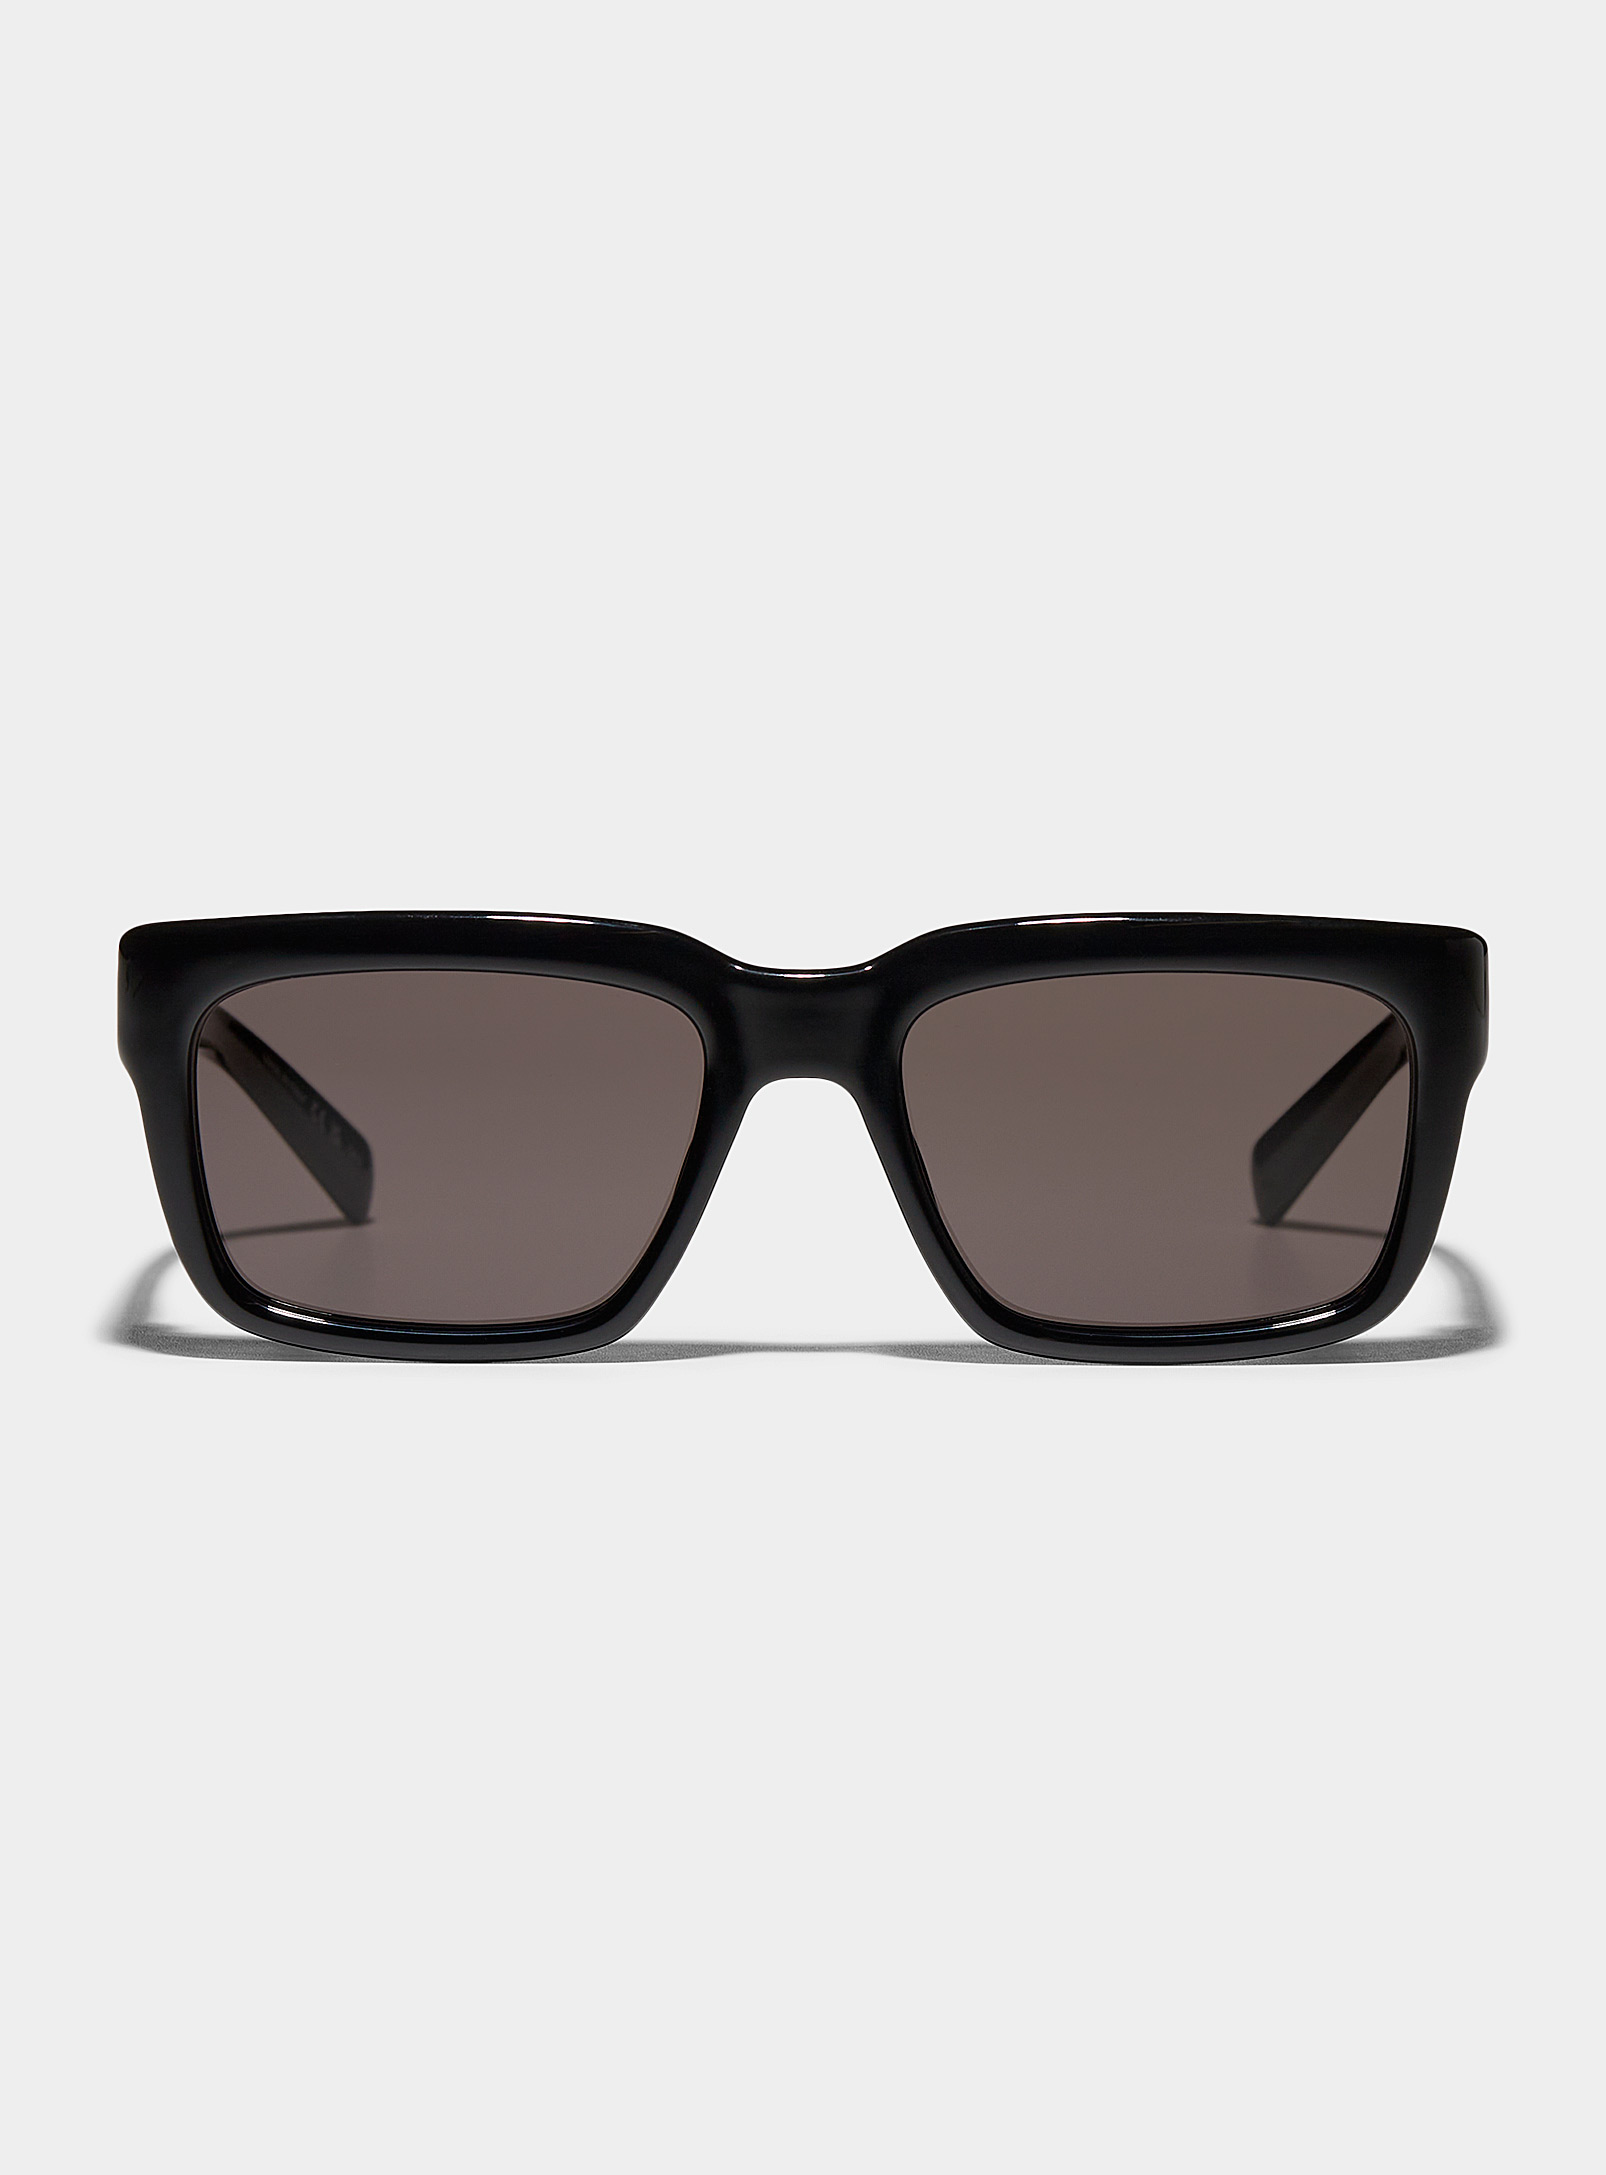 Saint Laurent Glossy Black Rectangular Sunglasses